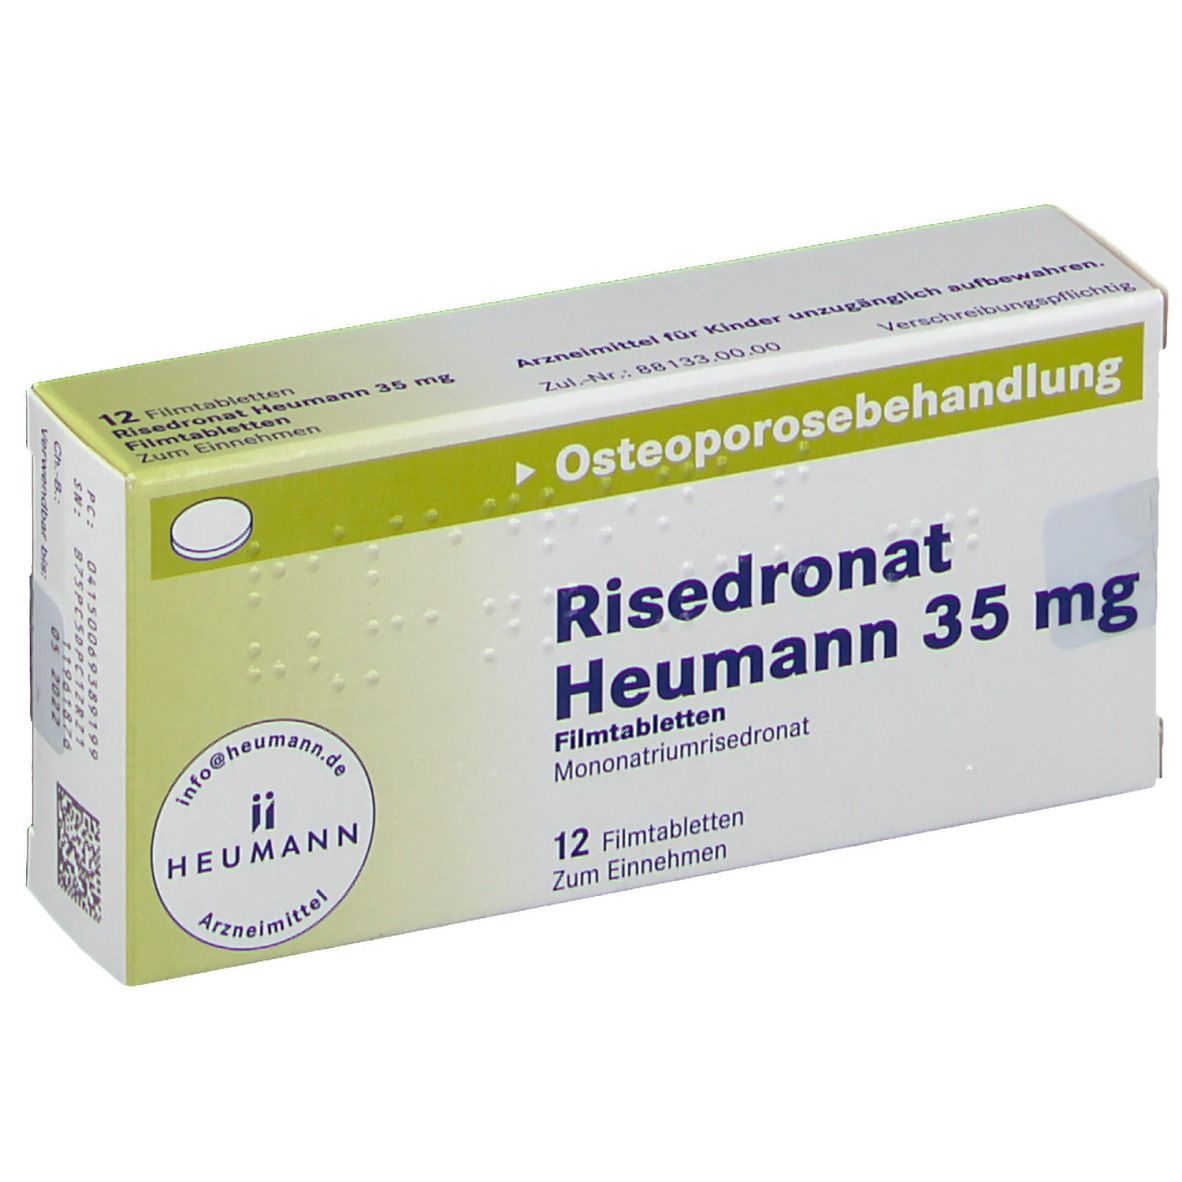 Risedronat Heumann 35 mg